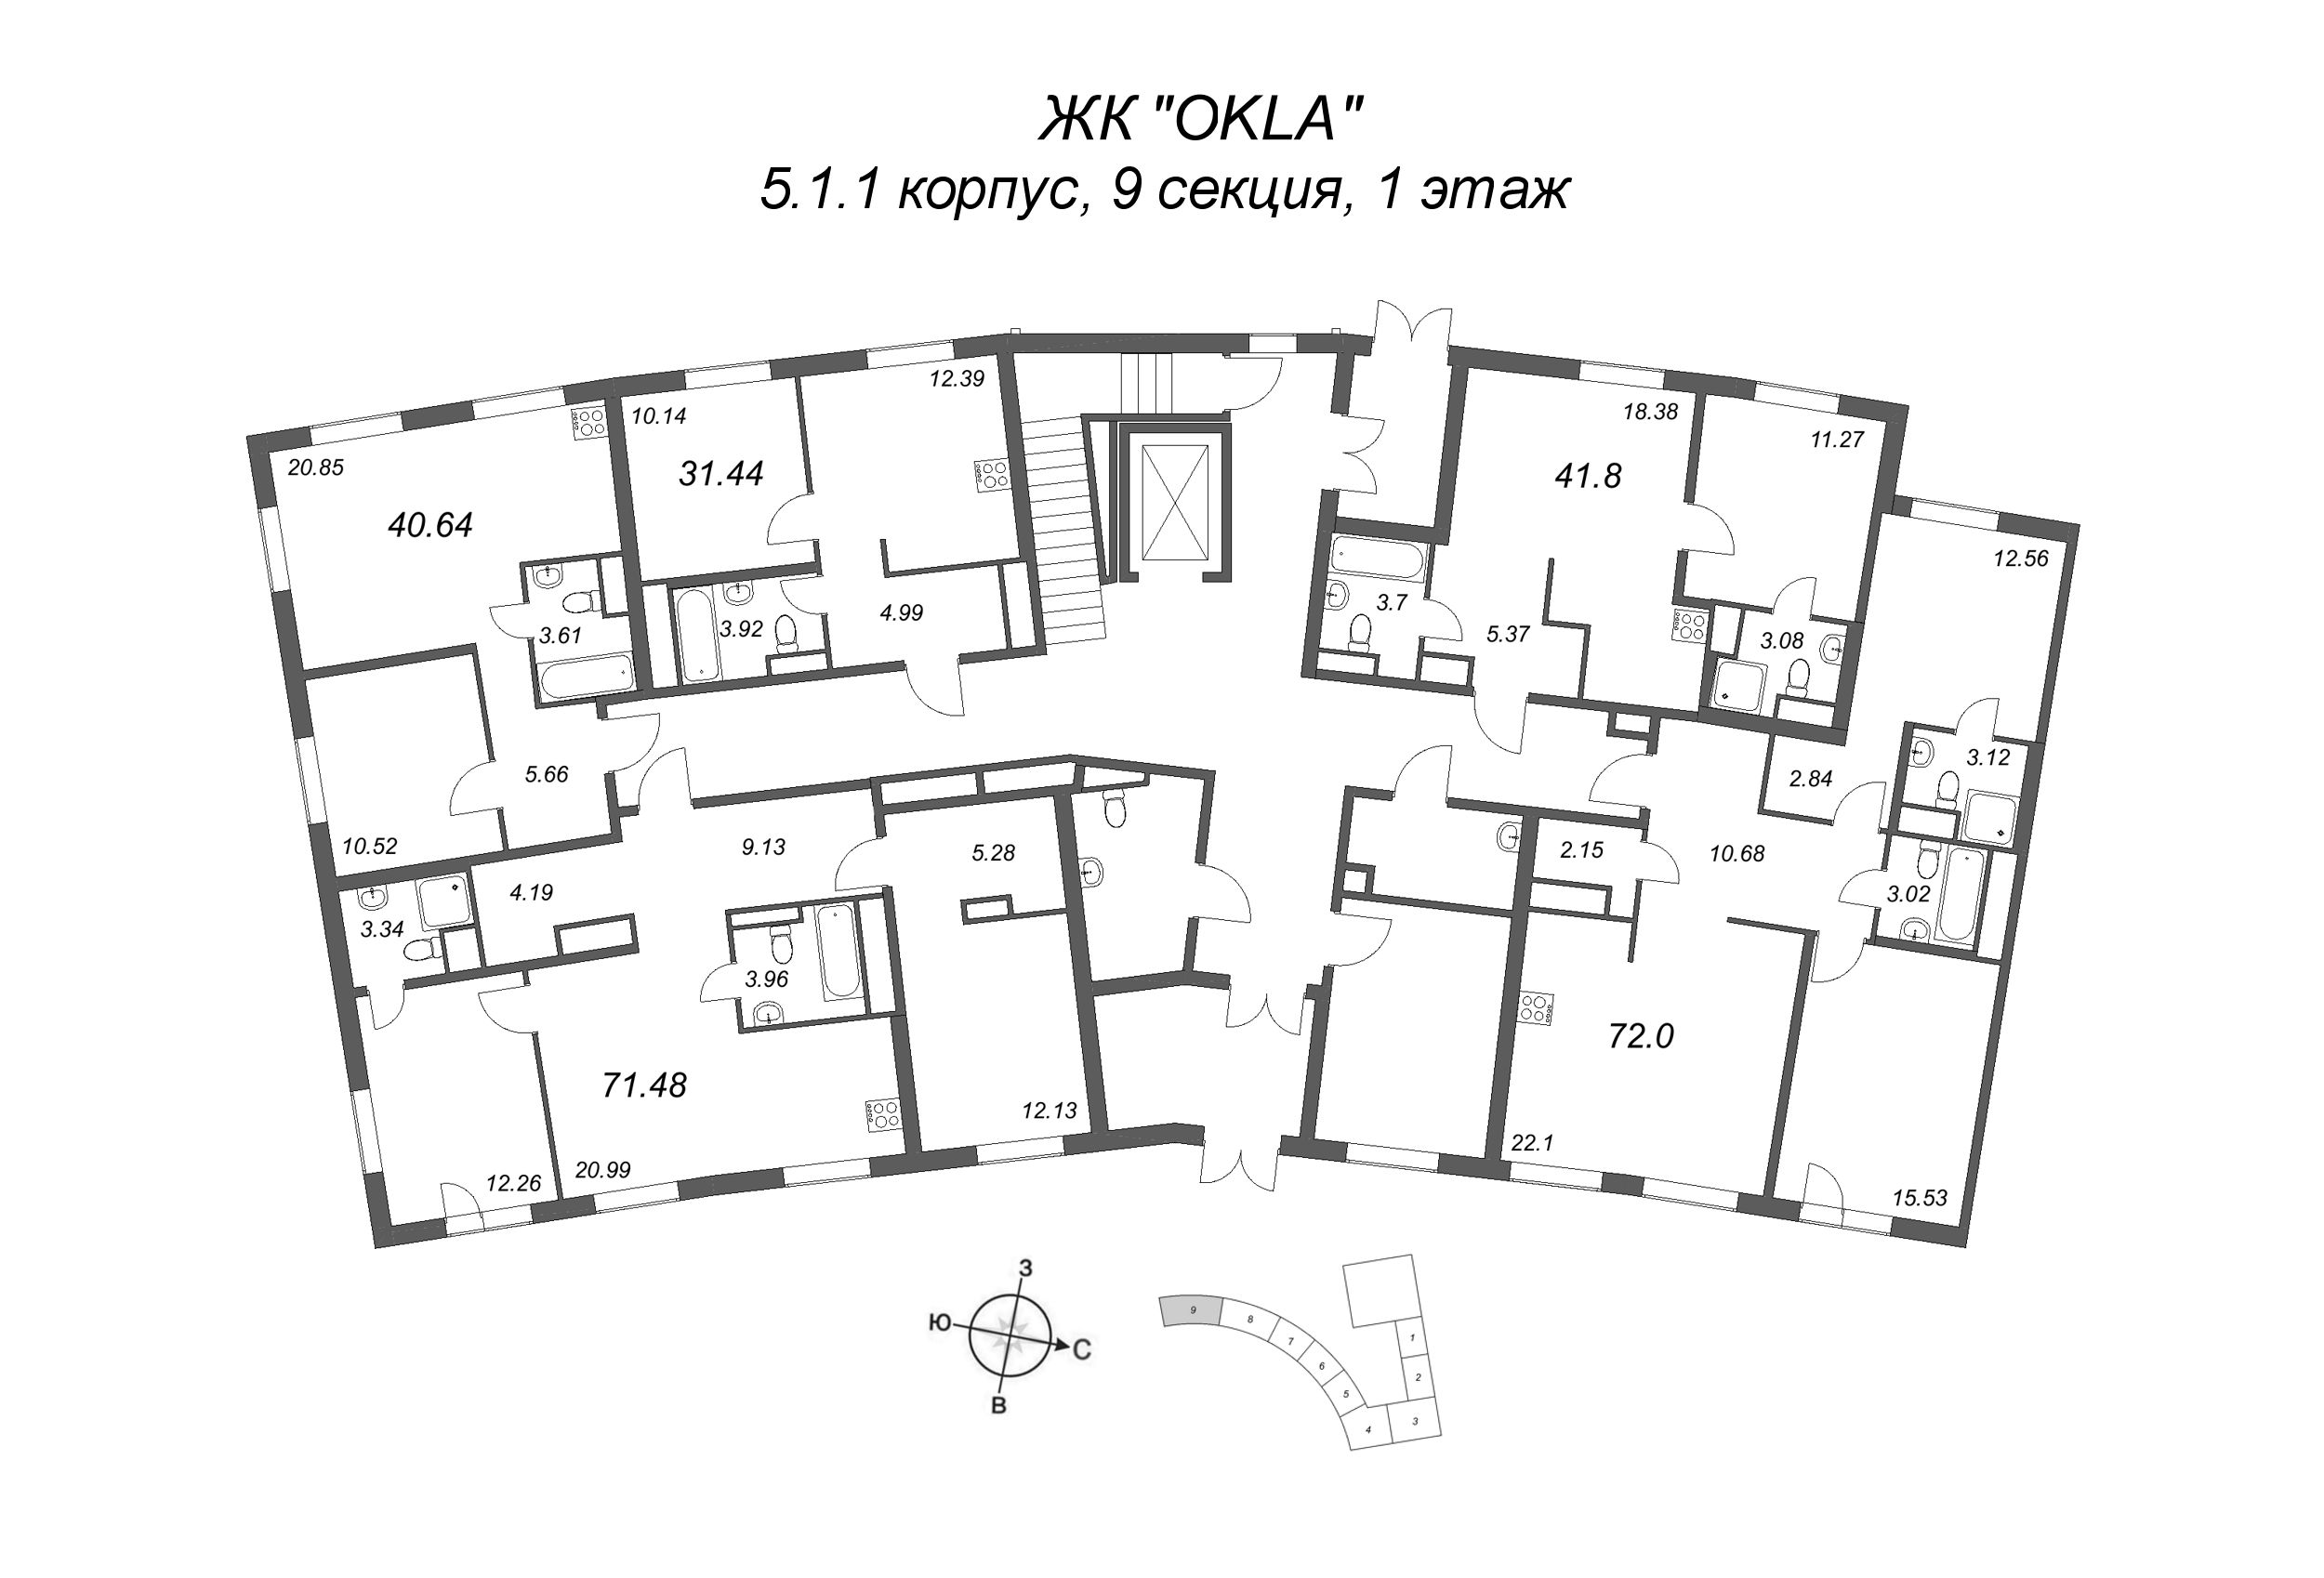 2-комнатная (Евро) квартира, 40.64 м² - планировка этажа